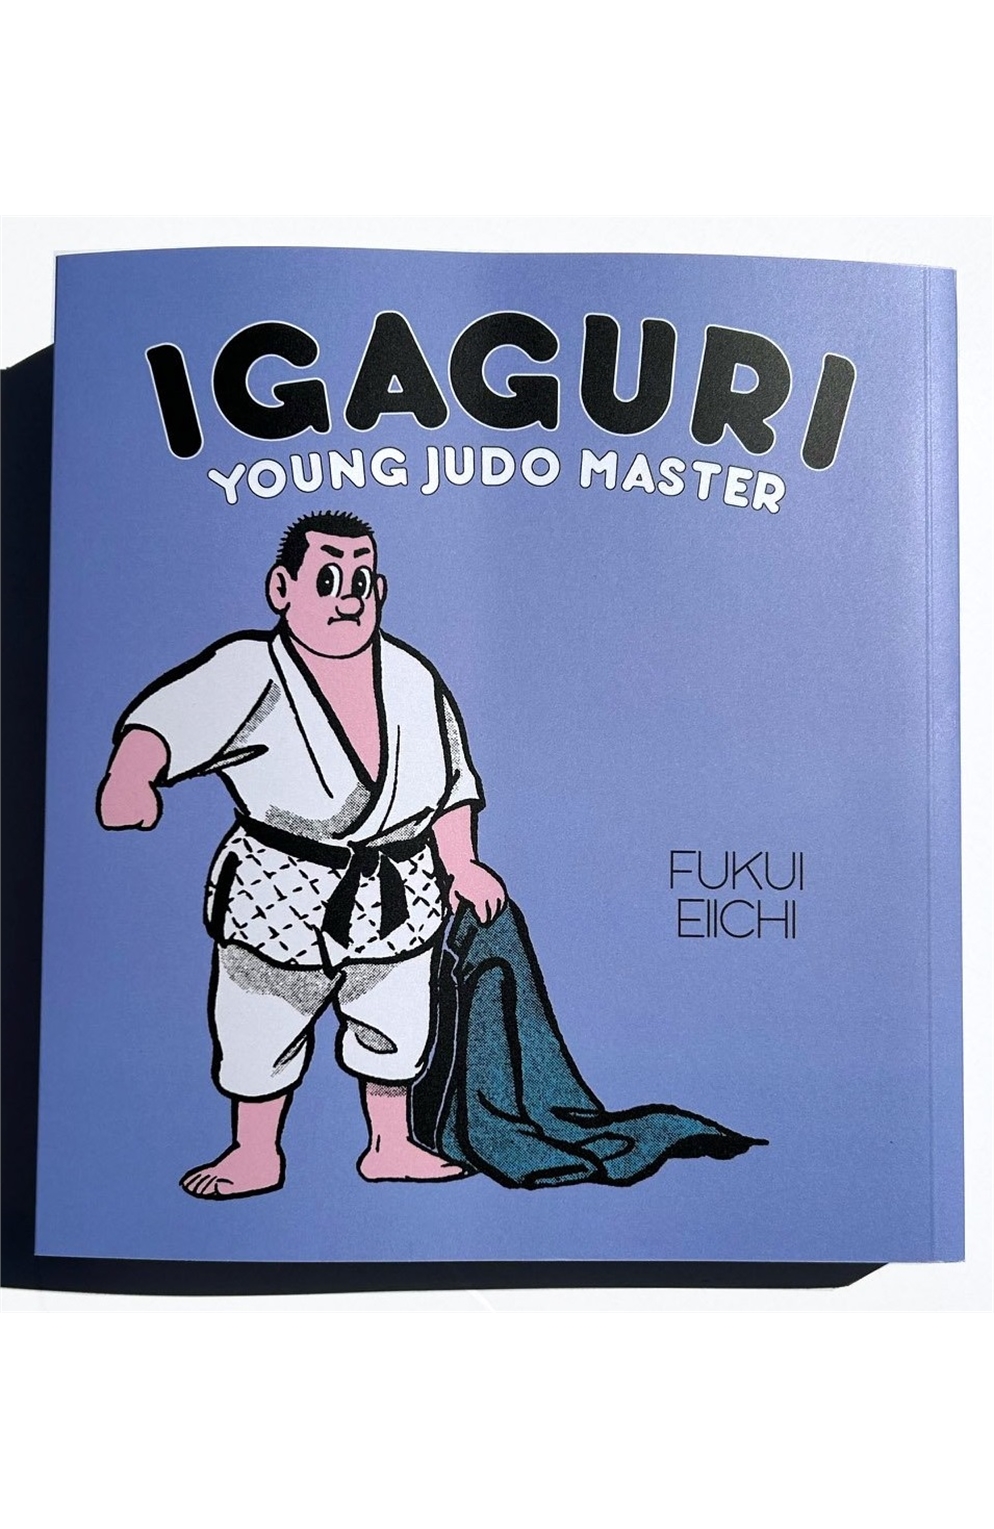 Igaguri: Young Judo Master